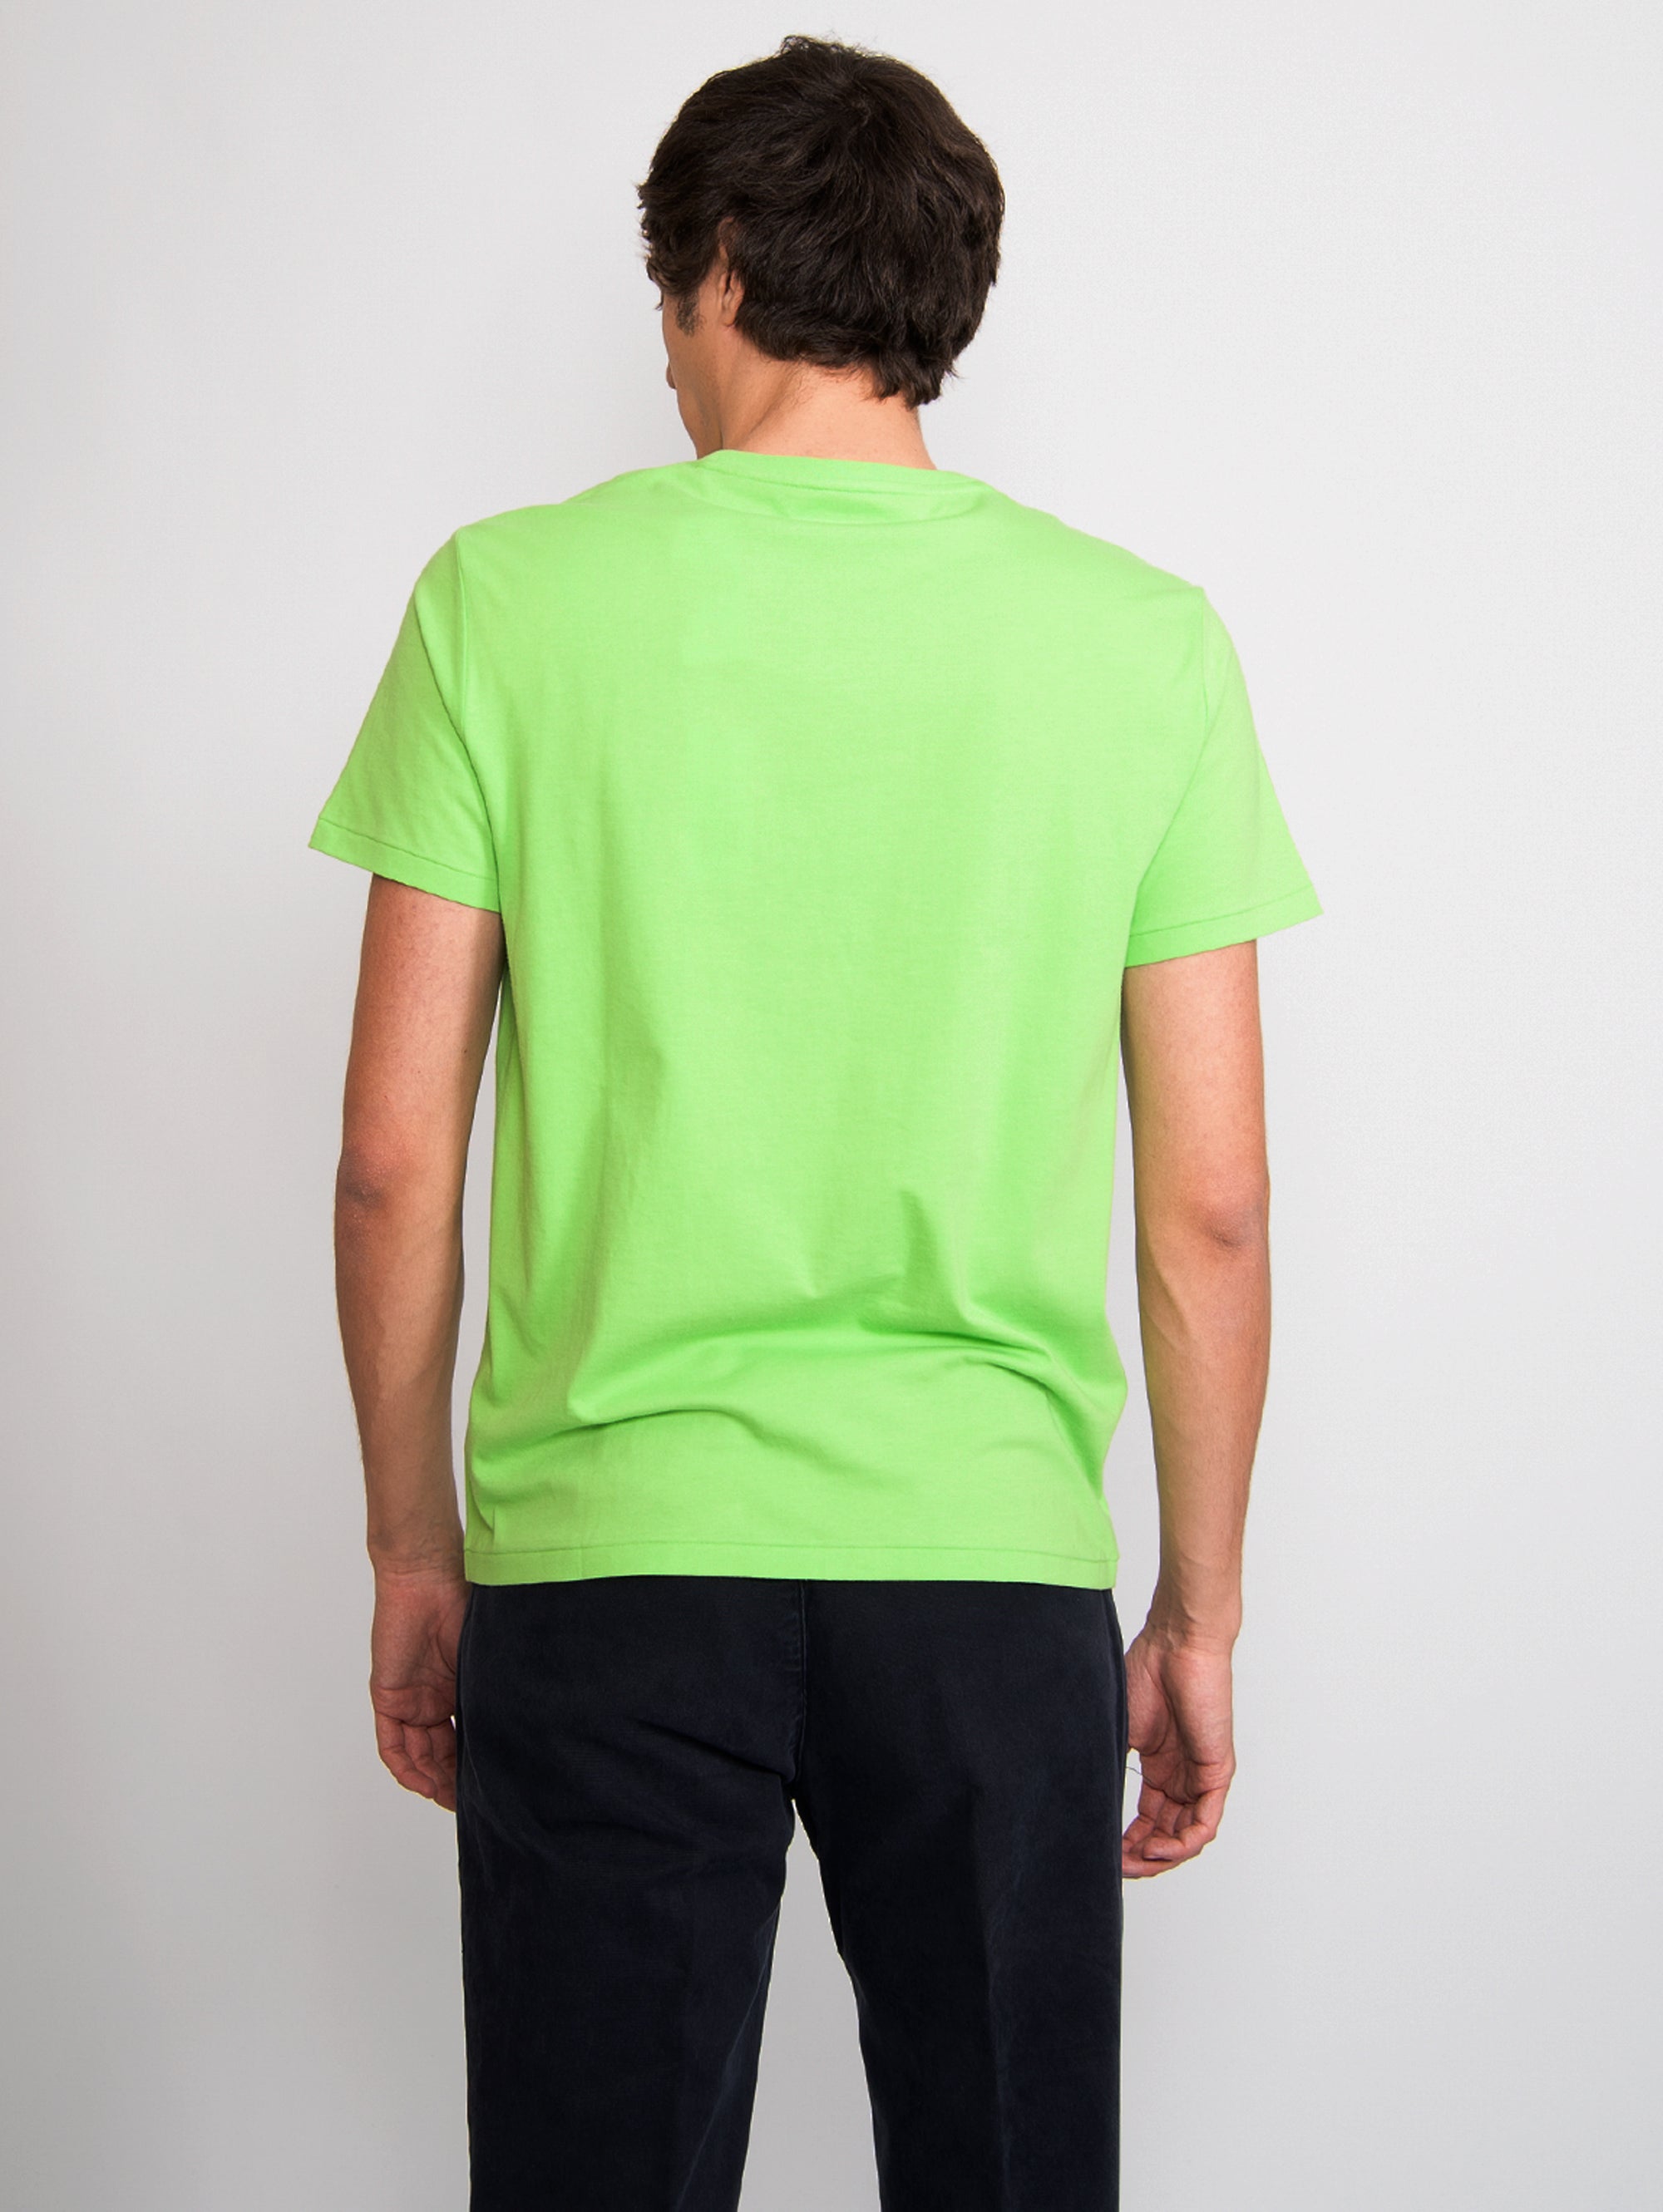 Grünes T-Shirt mit Rundhalsausschnitt